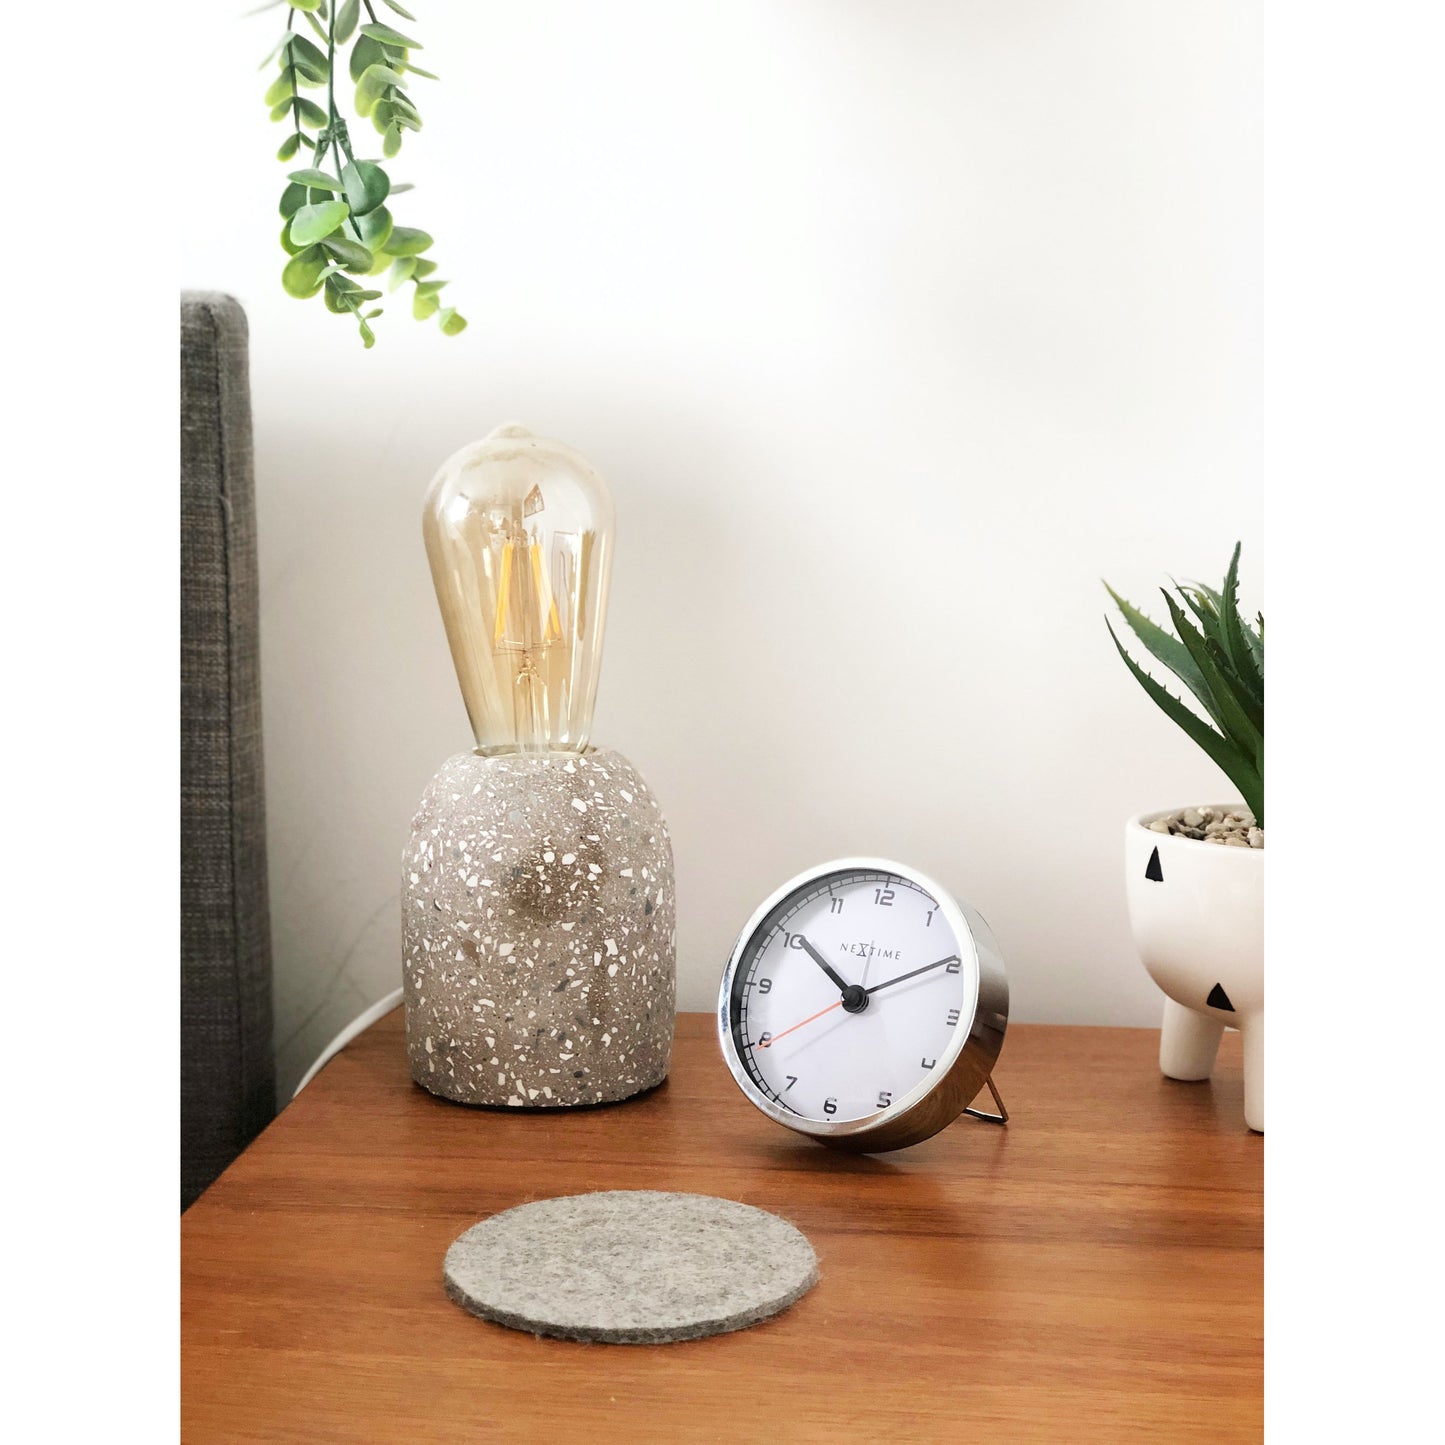 NeXtime - Alarm clock - 9 x 9 x 7.5 cm - Metal - White - 'Company Alarm'